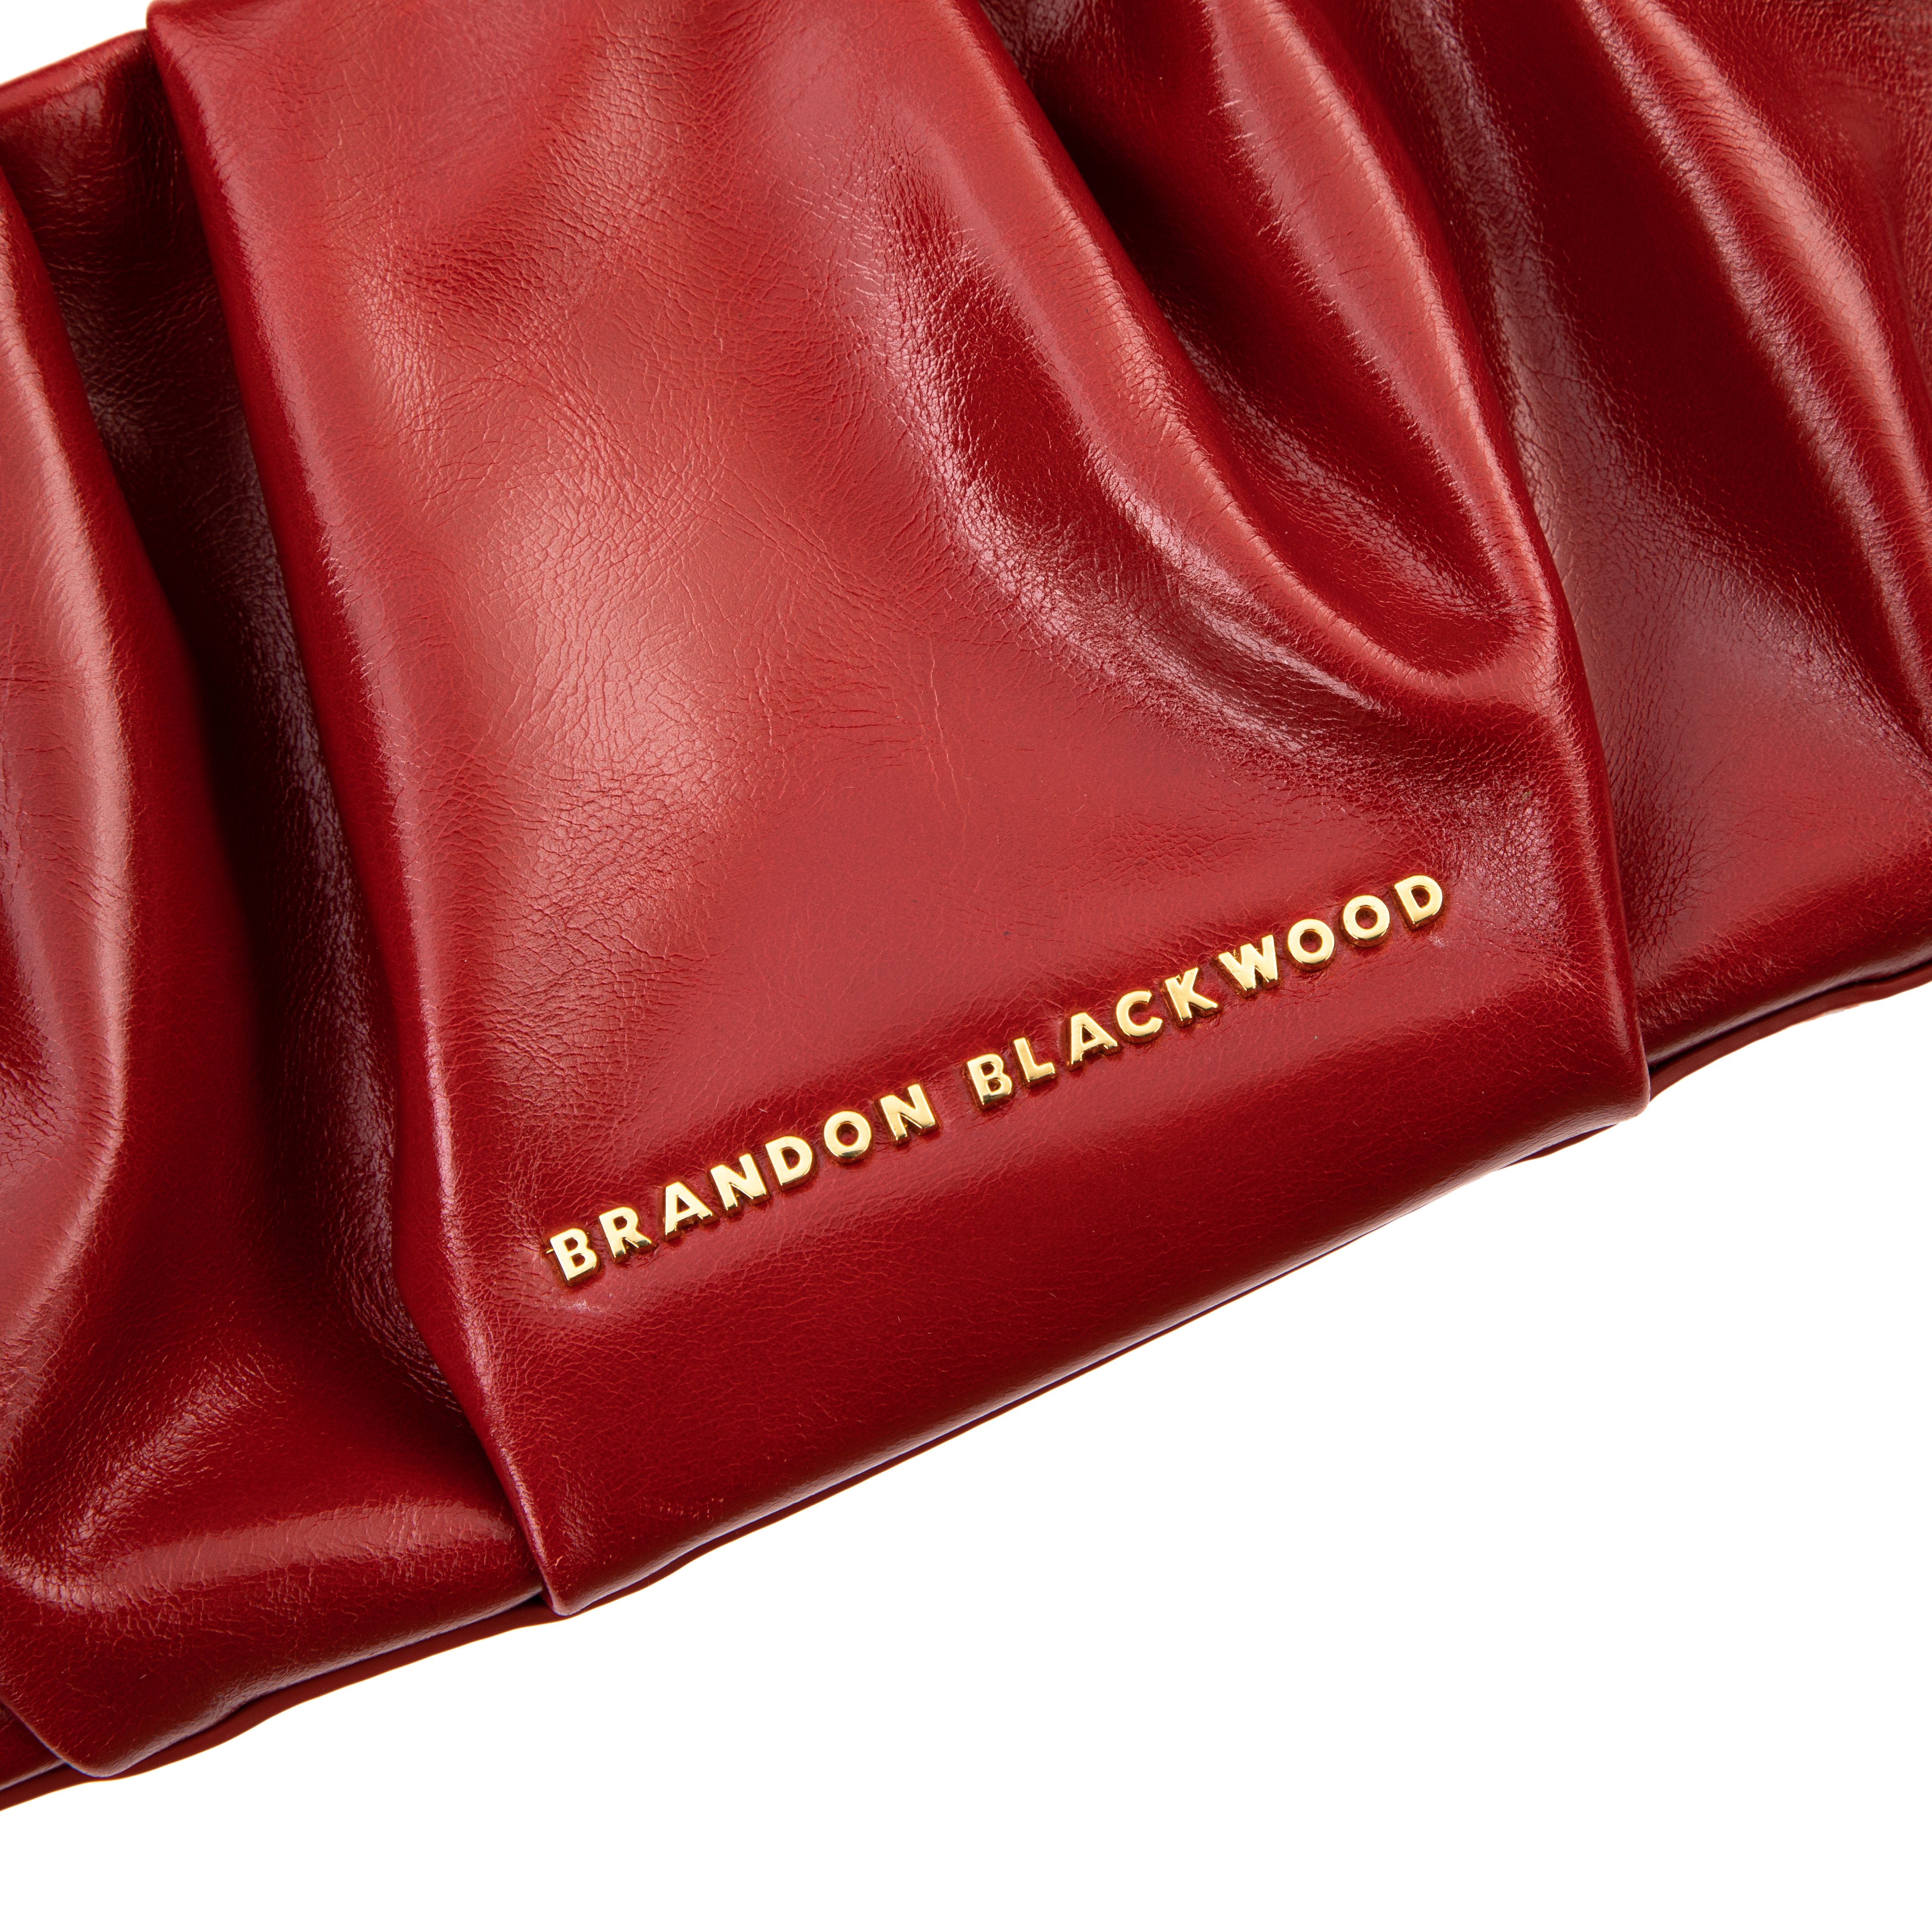 Brandon Blackwood New York - De La Cruz Bag - Red Oil Leather